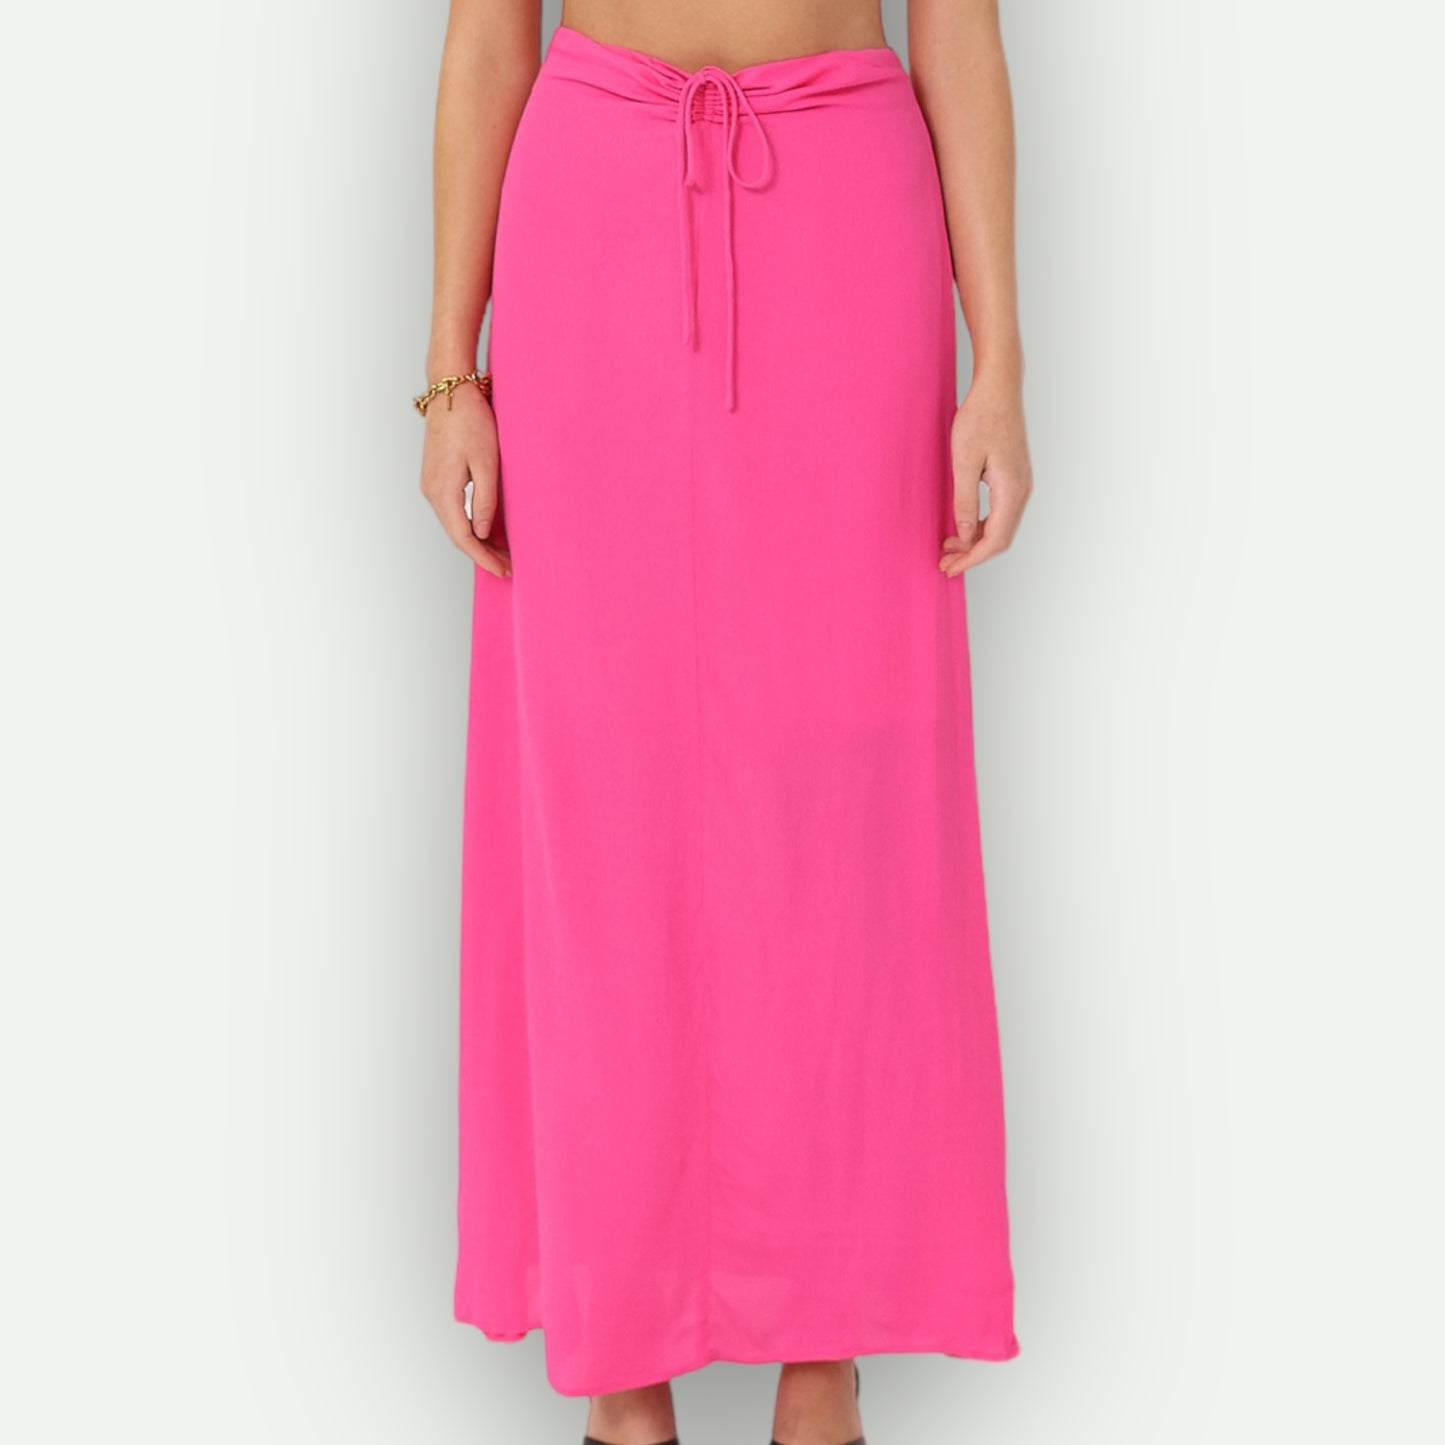 Meadow Skirt in Pink by SNDYS